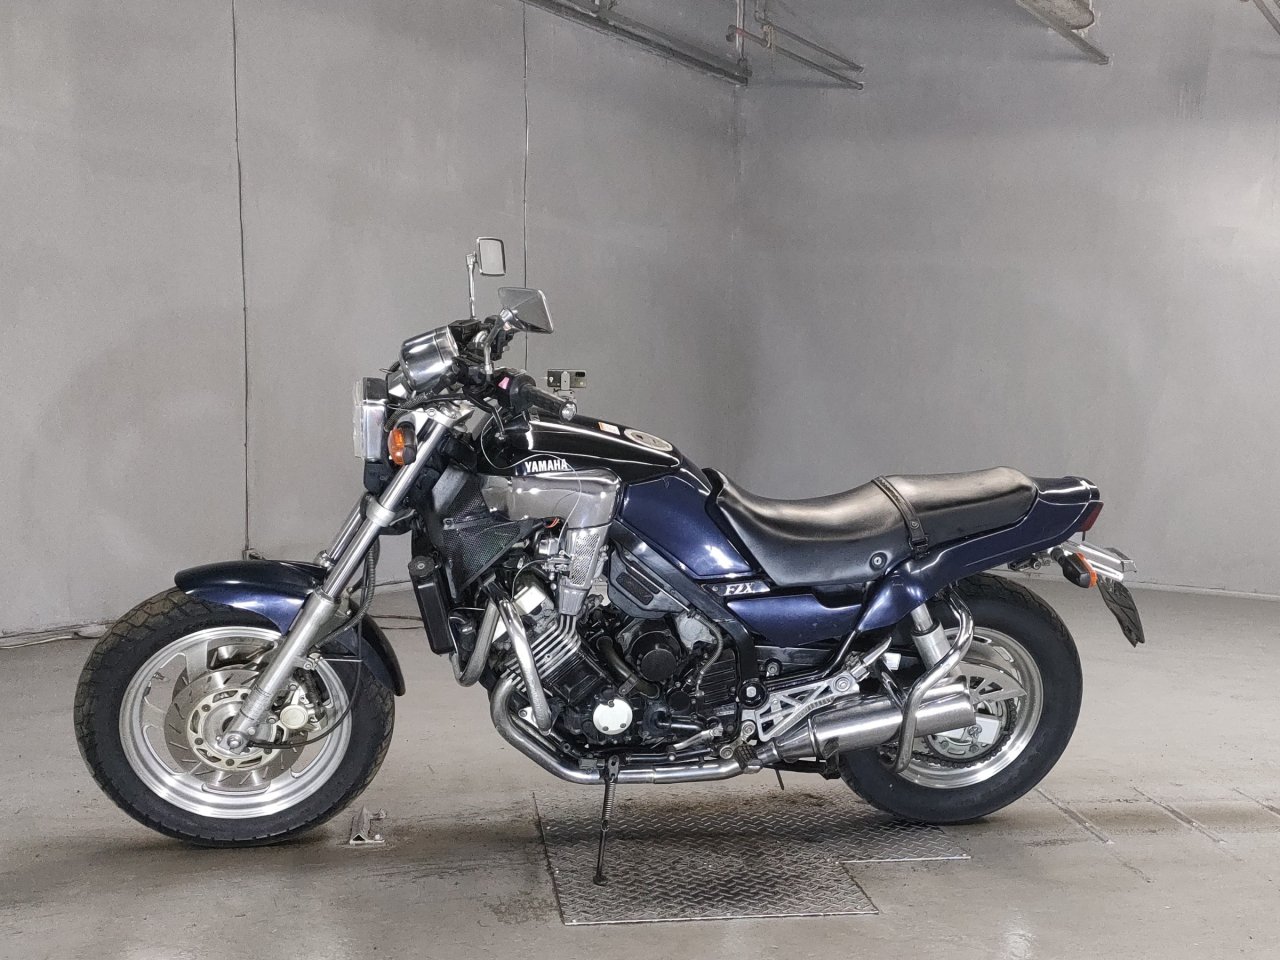 Yamaha FZX750 - Adamoto - Motorcycles from Japan